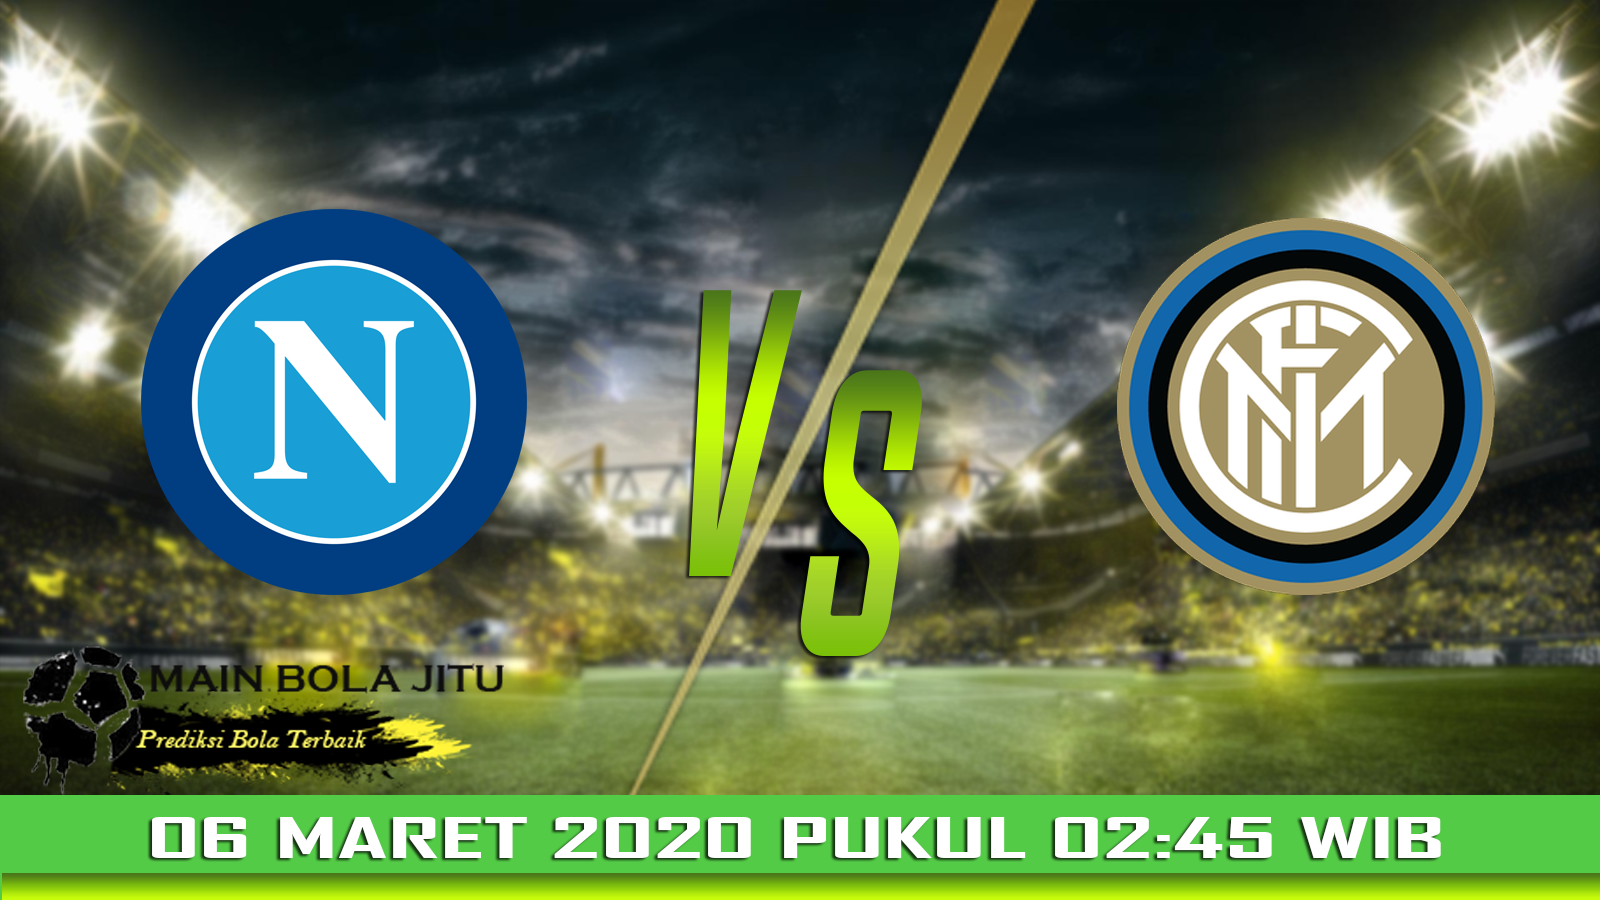 Prediksi Skor Napoli vs Inter Milan tanggal 06-03-2020